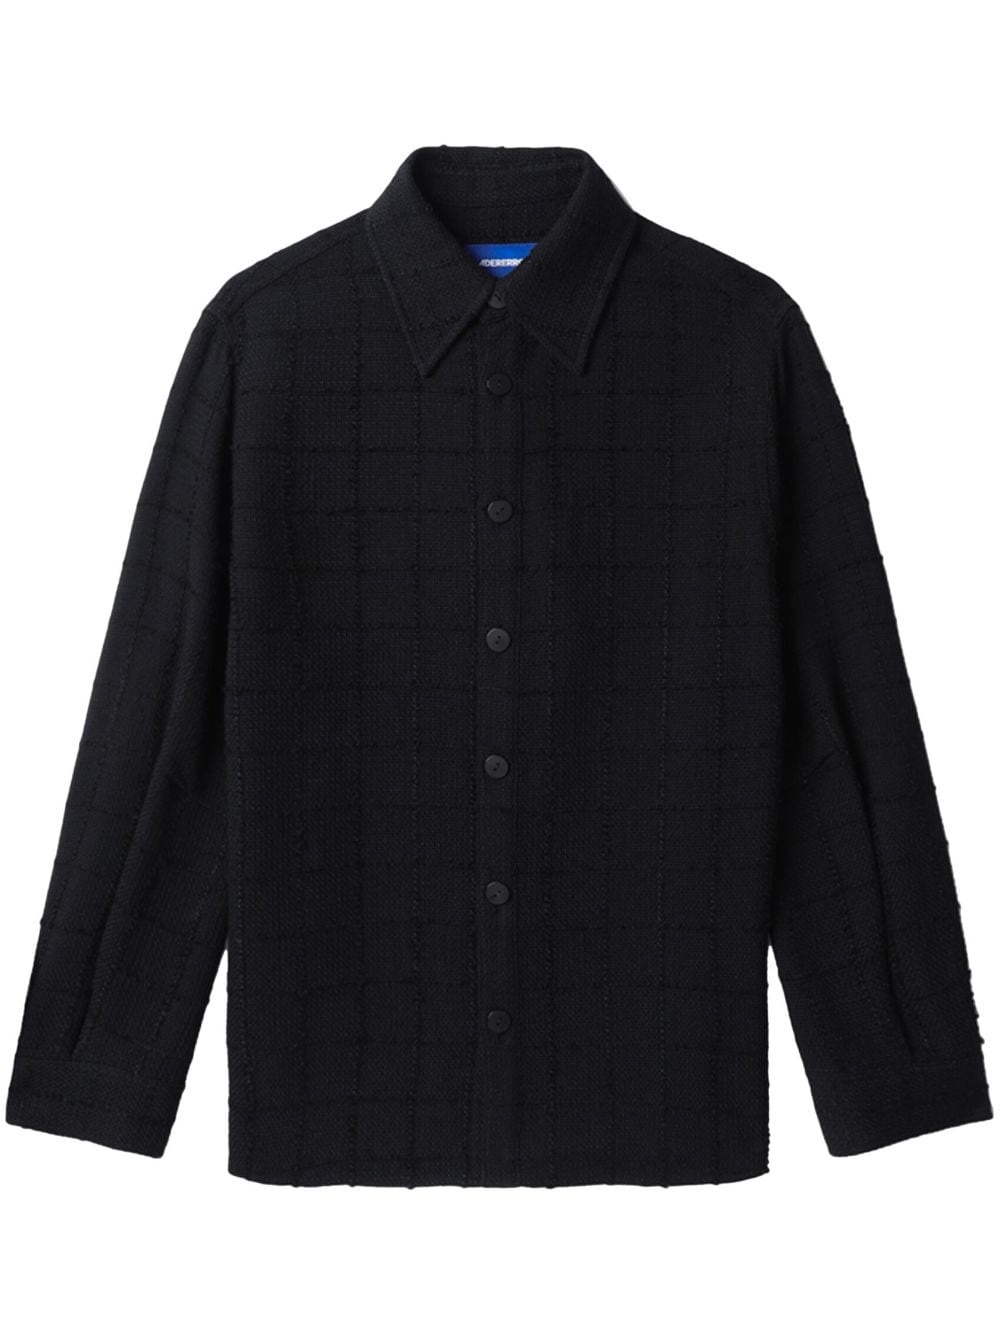 Lembu checkered shirt - 1